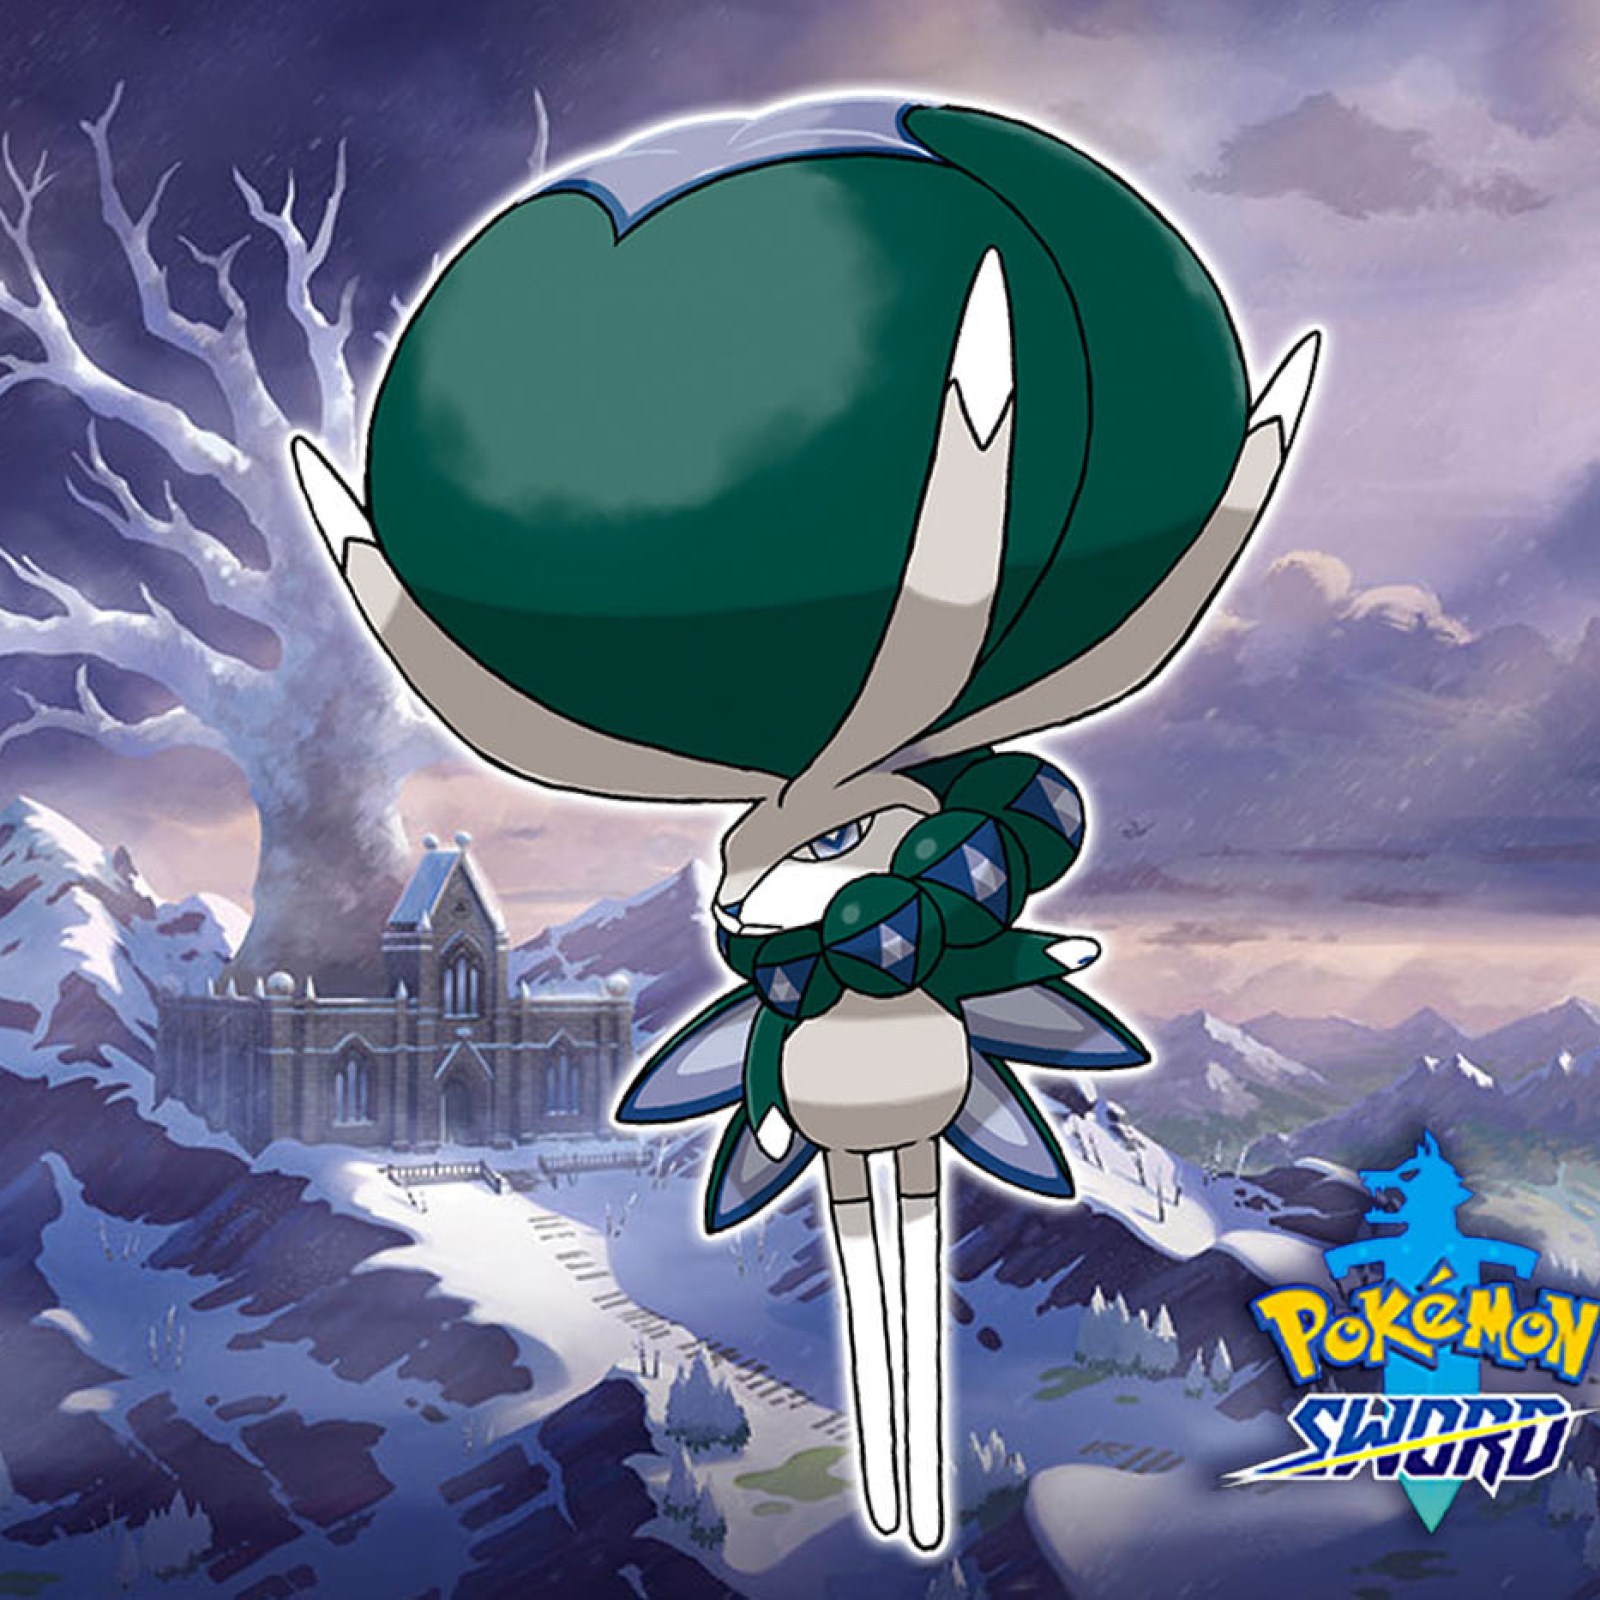 Pokémon Sword and Shield: The Crown Tundra - Wikipedia